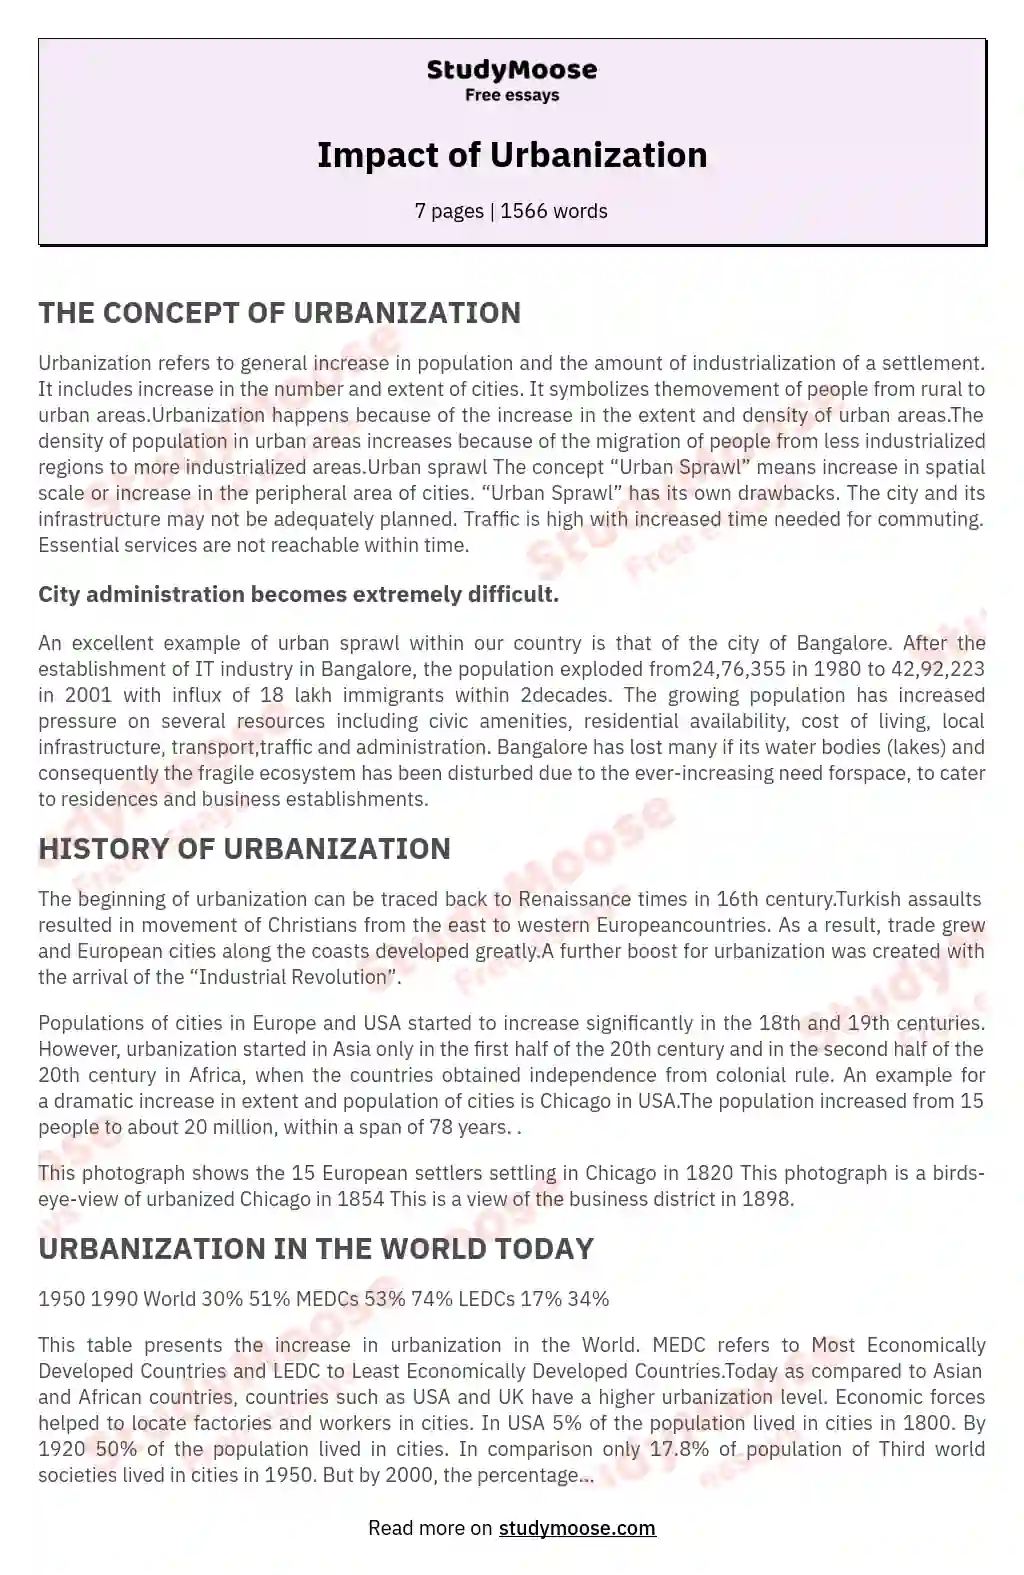 Impact of Urbanization essay